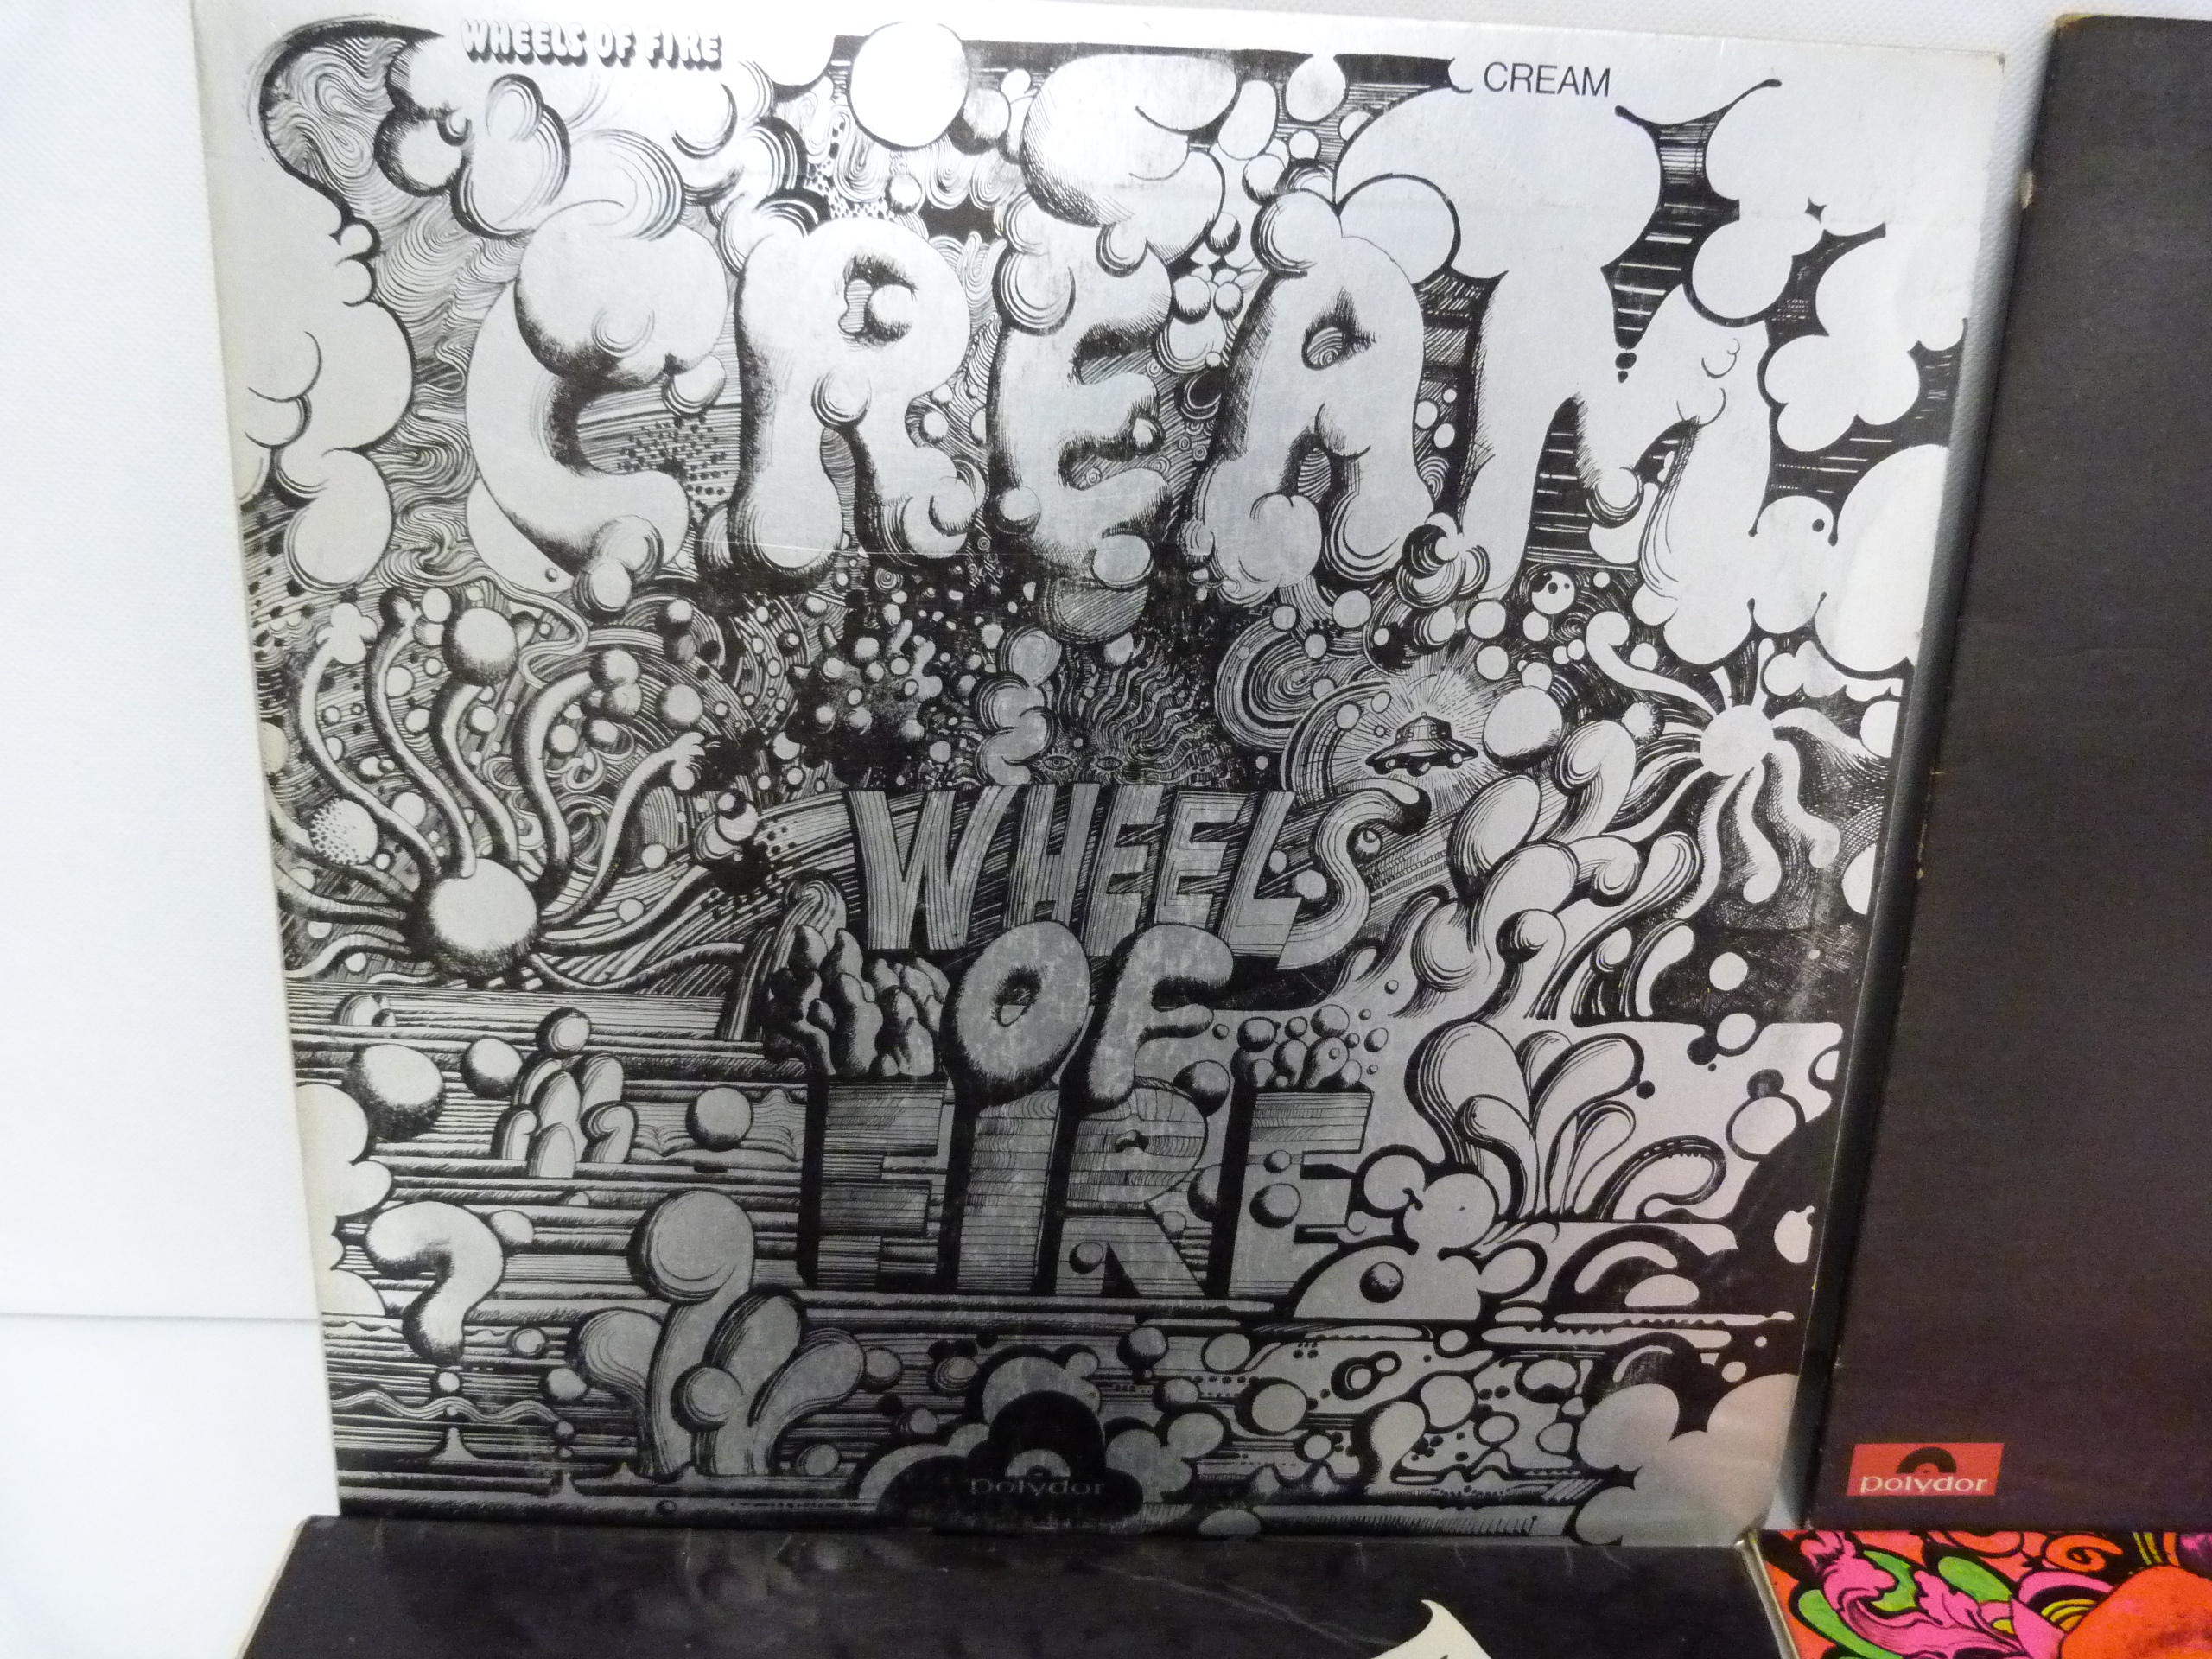 Cream UK LP's including Fresh Cream, Disraeli Gears, Wheels Of Fire and Goodbye. - Image 5 of 5